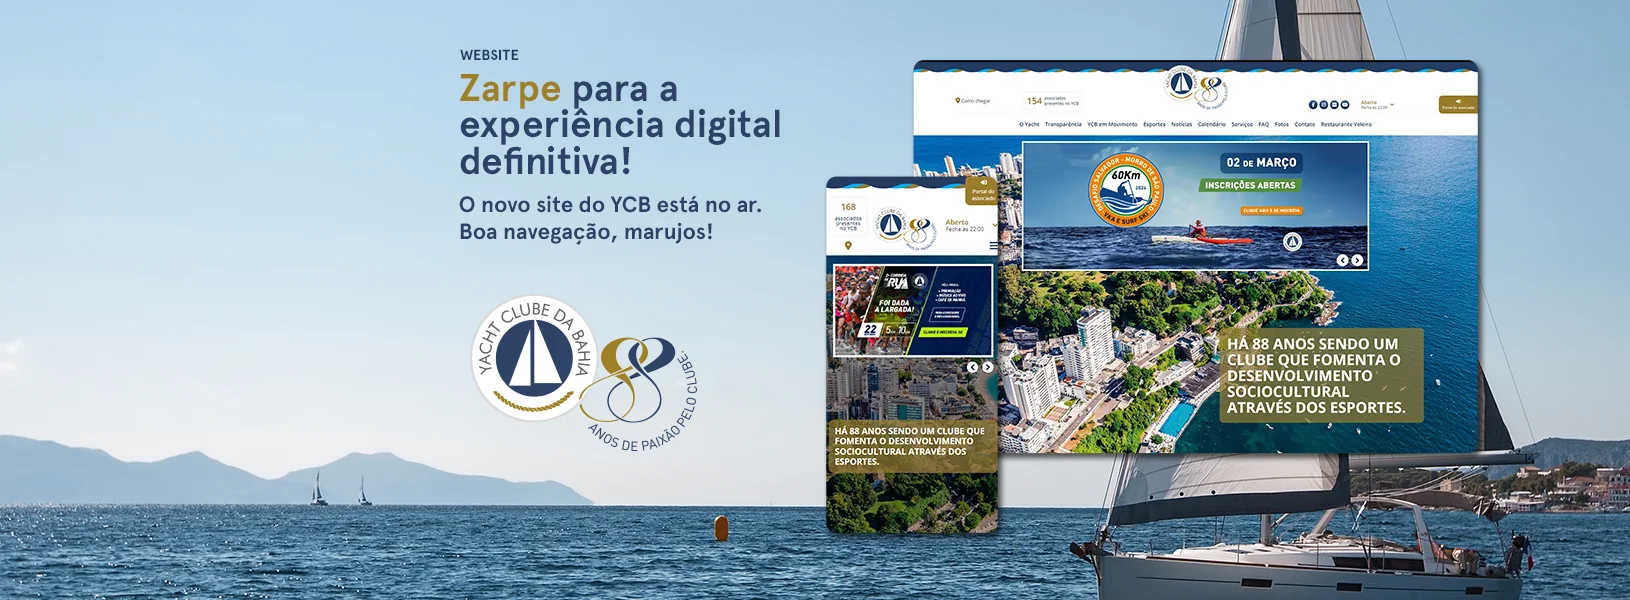 Yacht Clube da Bahia Novo site